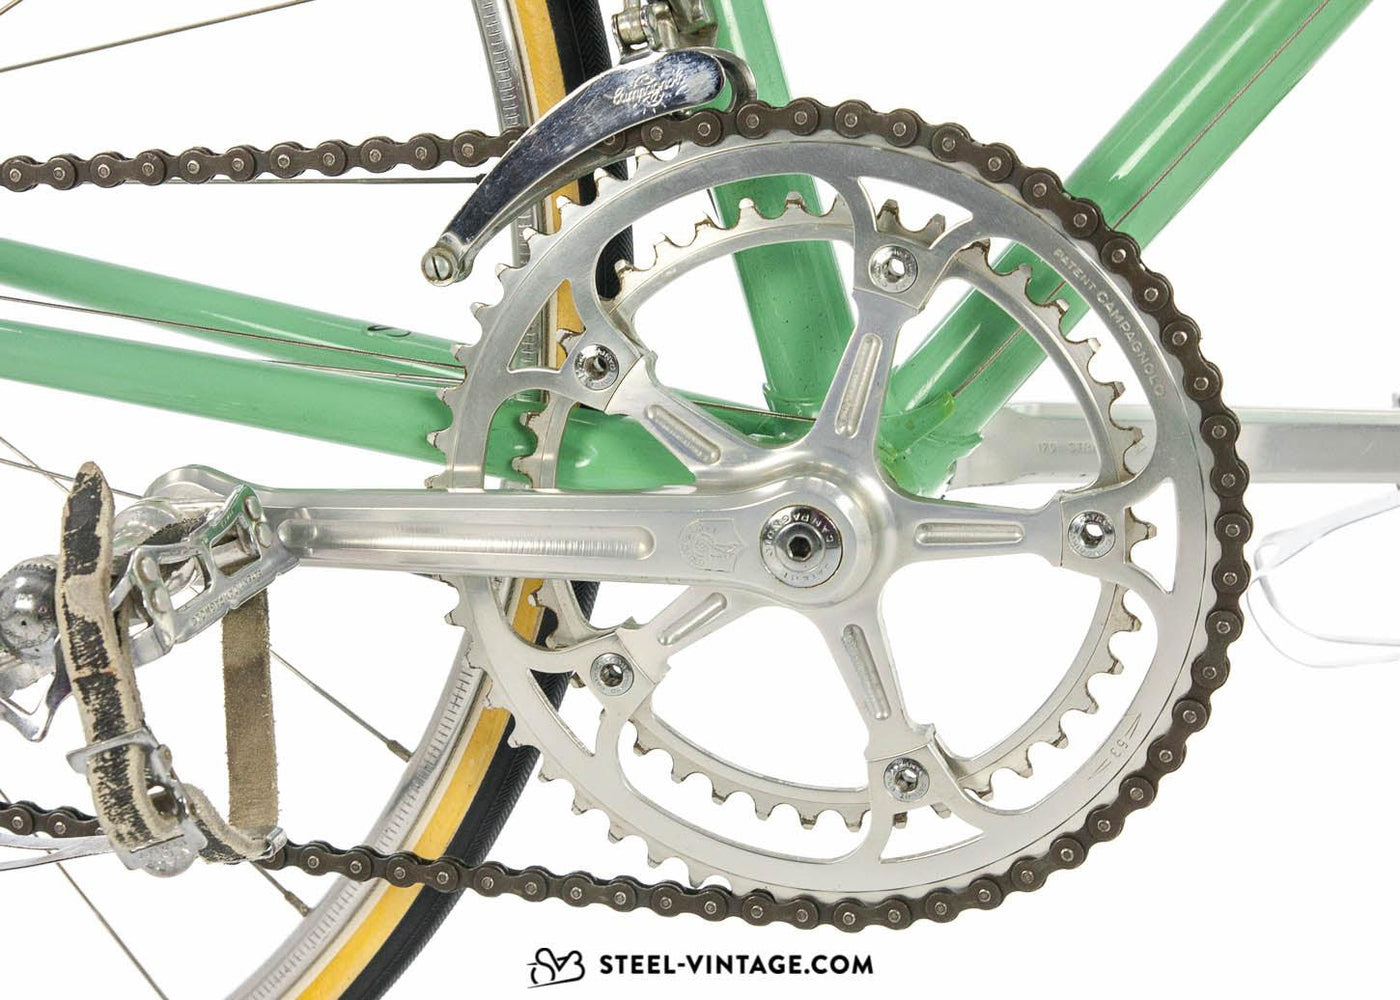 Bianchi Specialissima Classic Road Bike 1975 - Steel Vintage Bikes